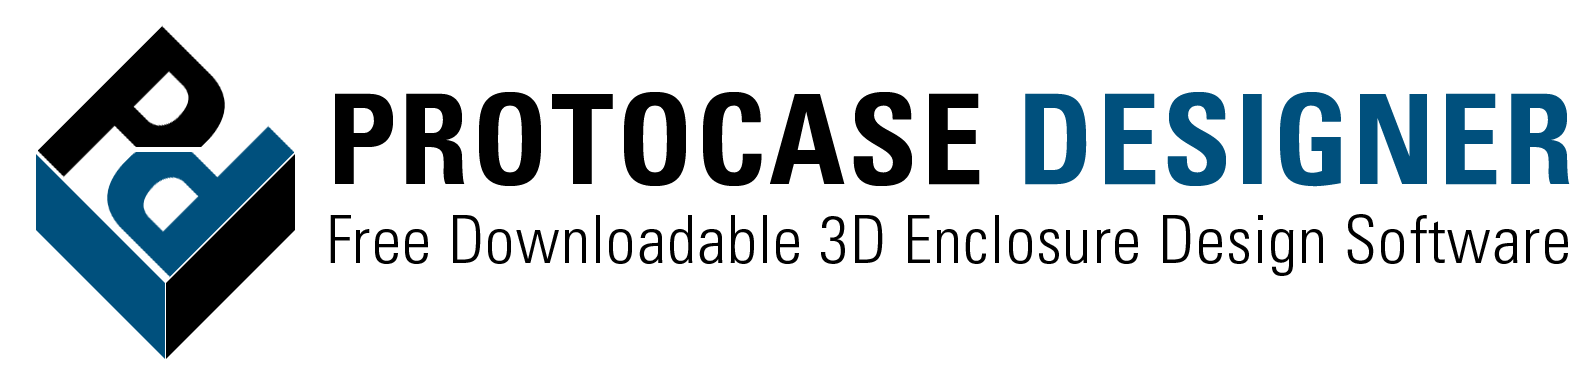 protocase designer logo